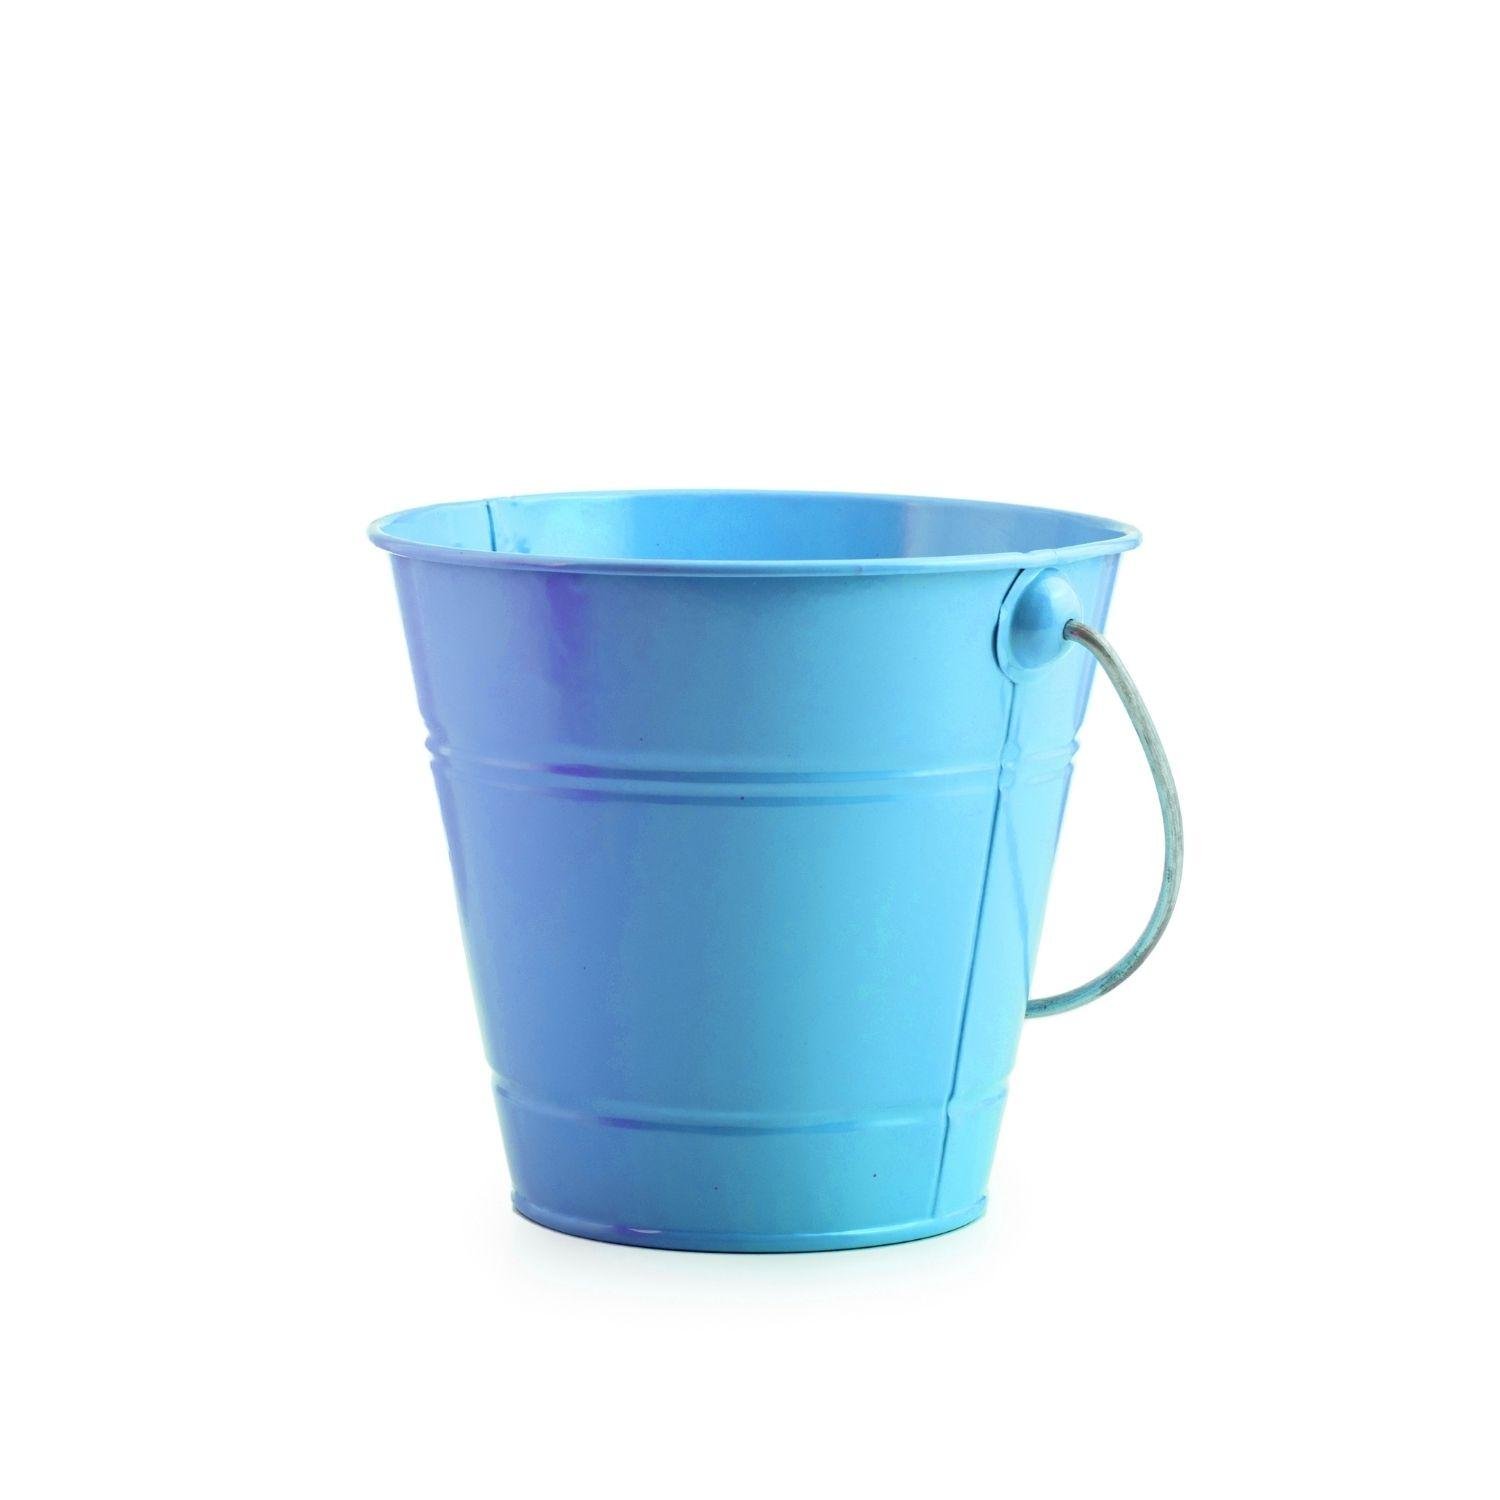 Turquoise Decorative Metal Bucket